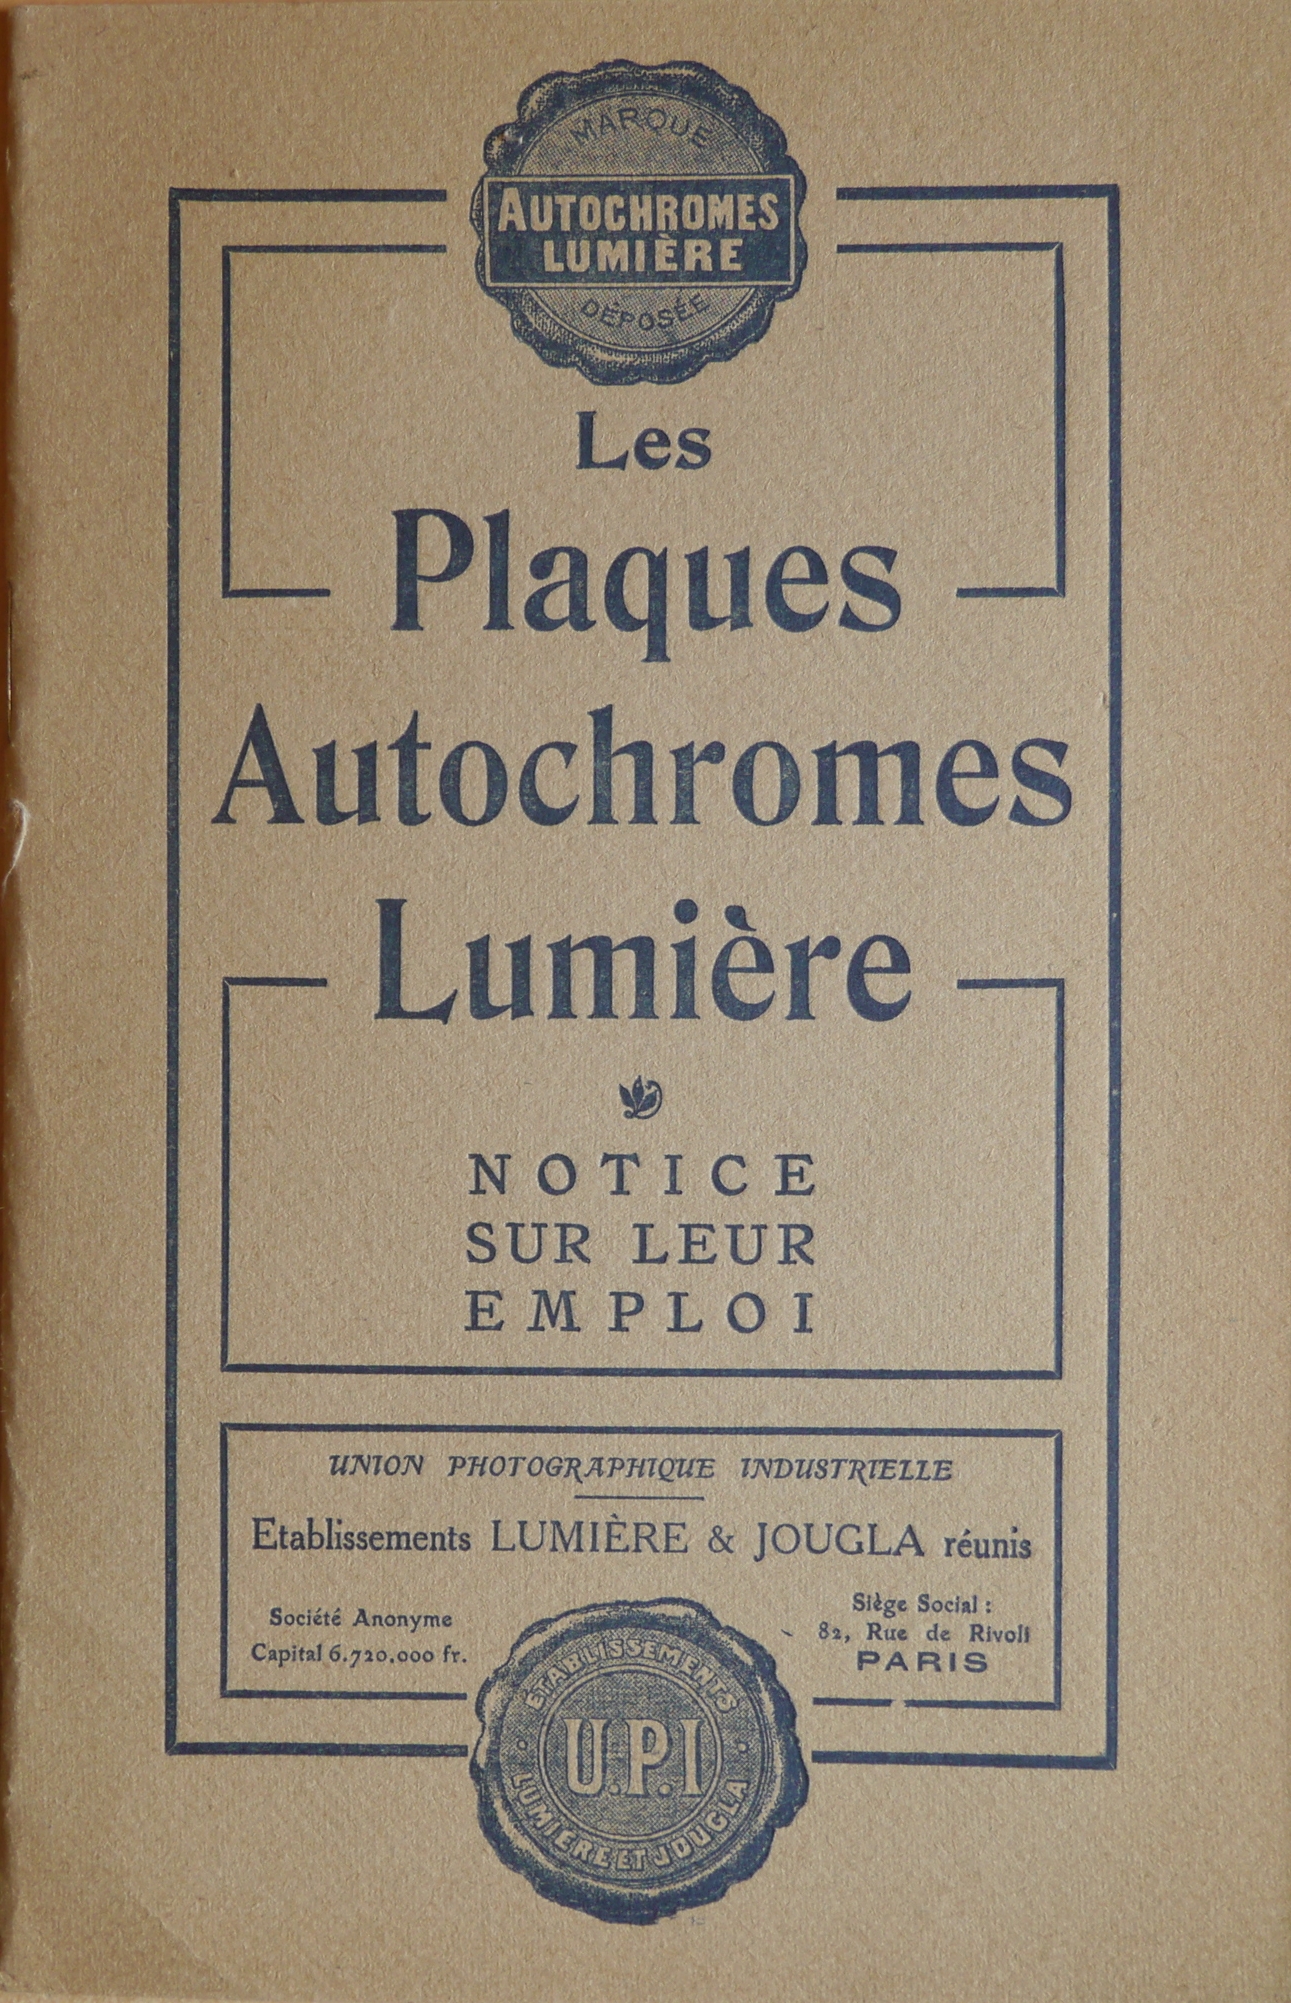 UPI - Notice Plaques Autochromes